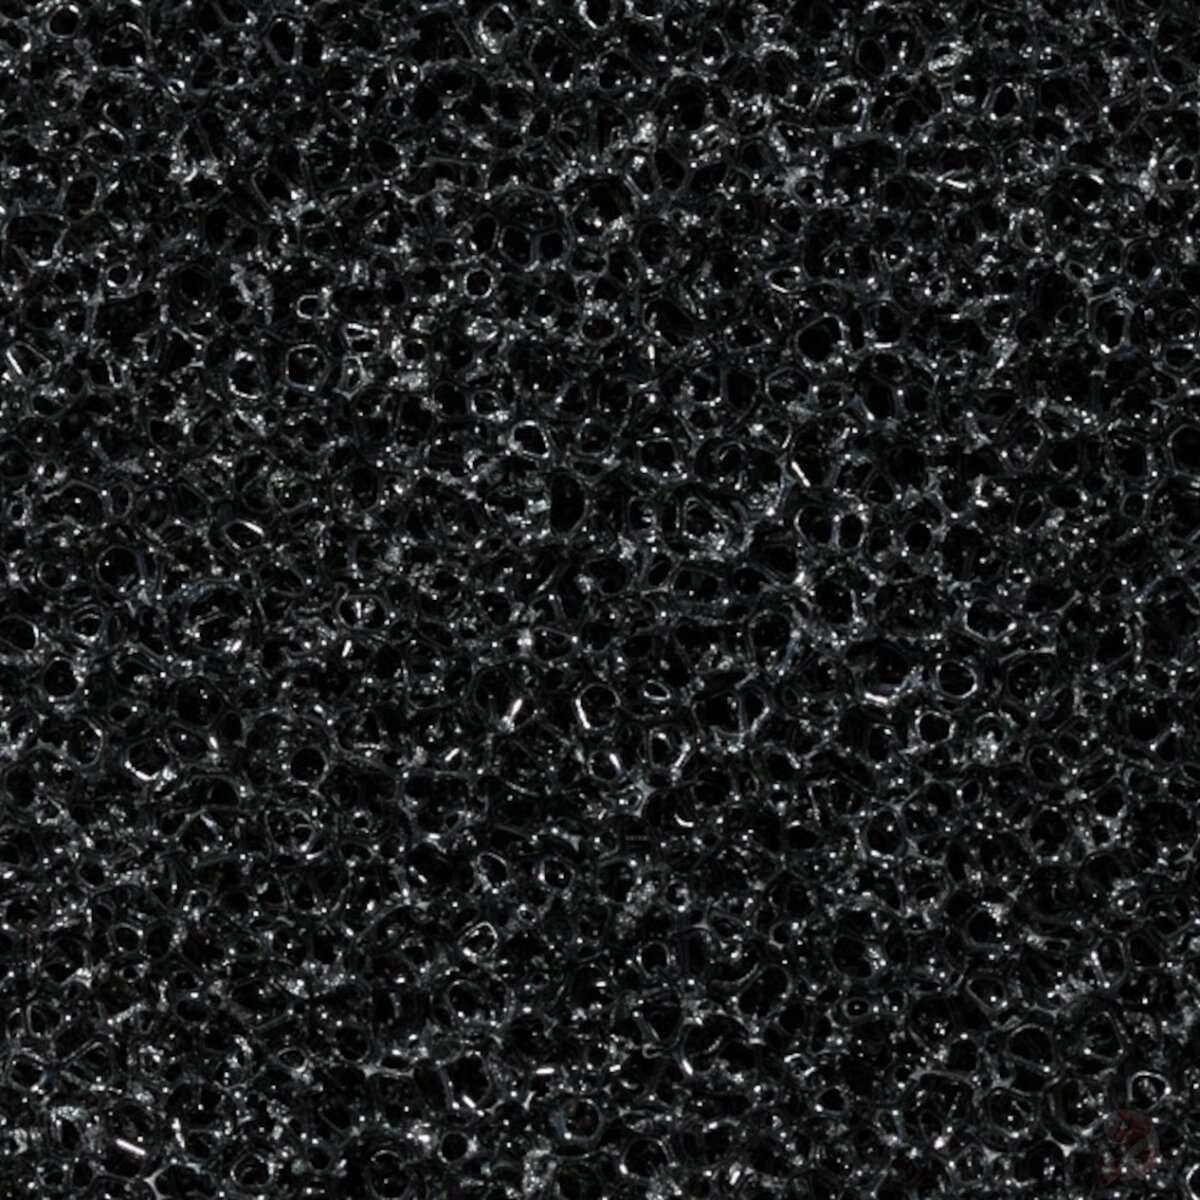 Filtermatte schwarz, 100 x 50 x 10 cm, 30 ppi